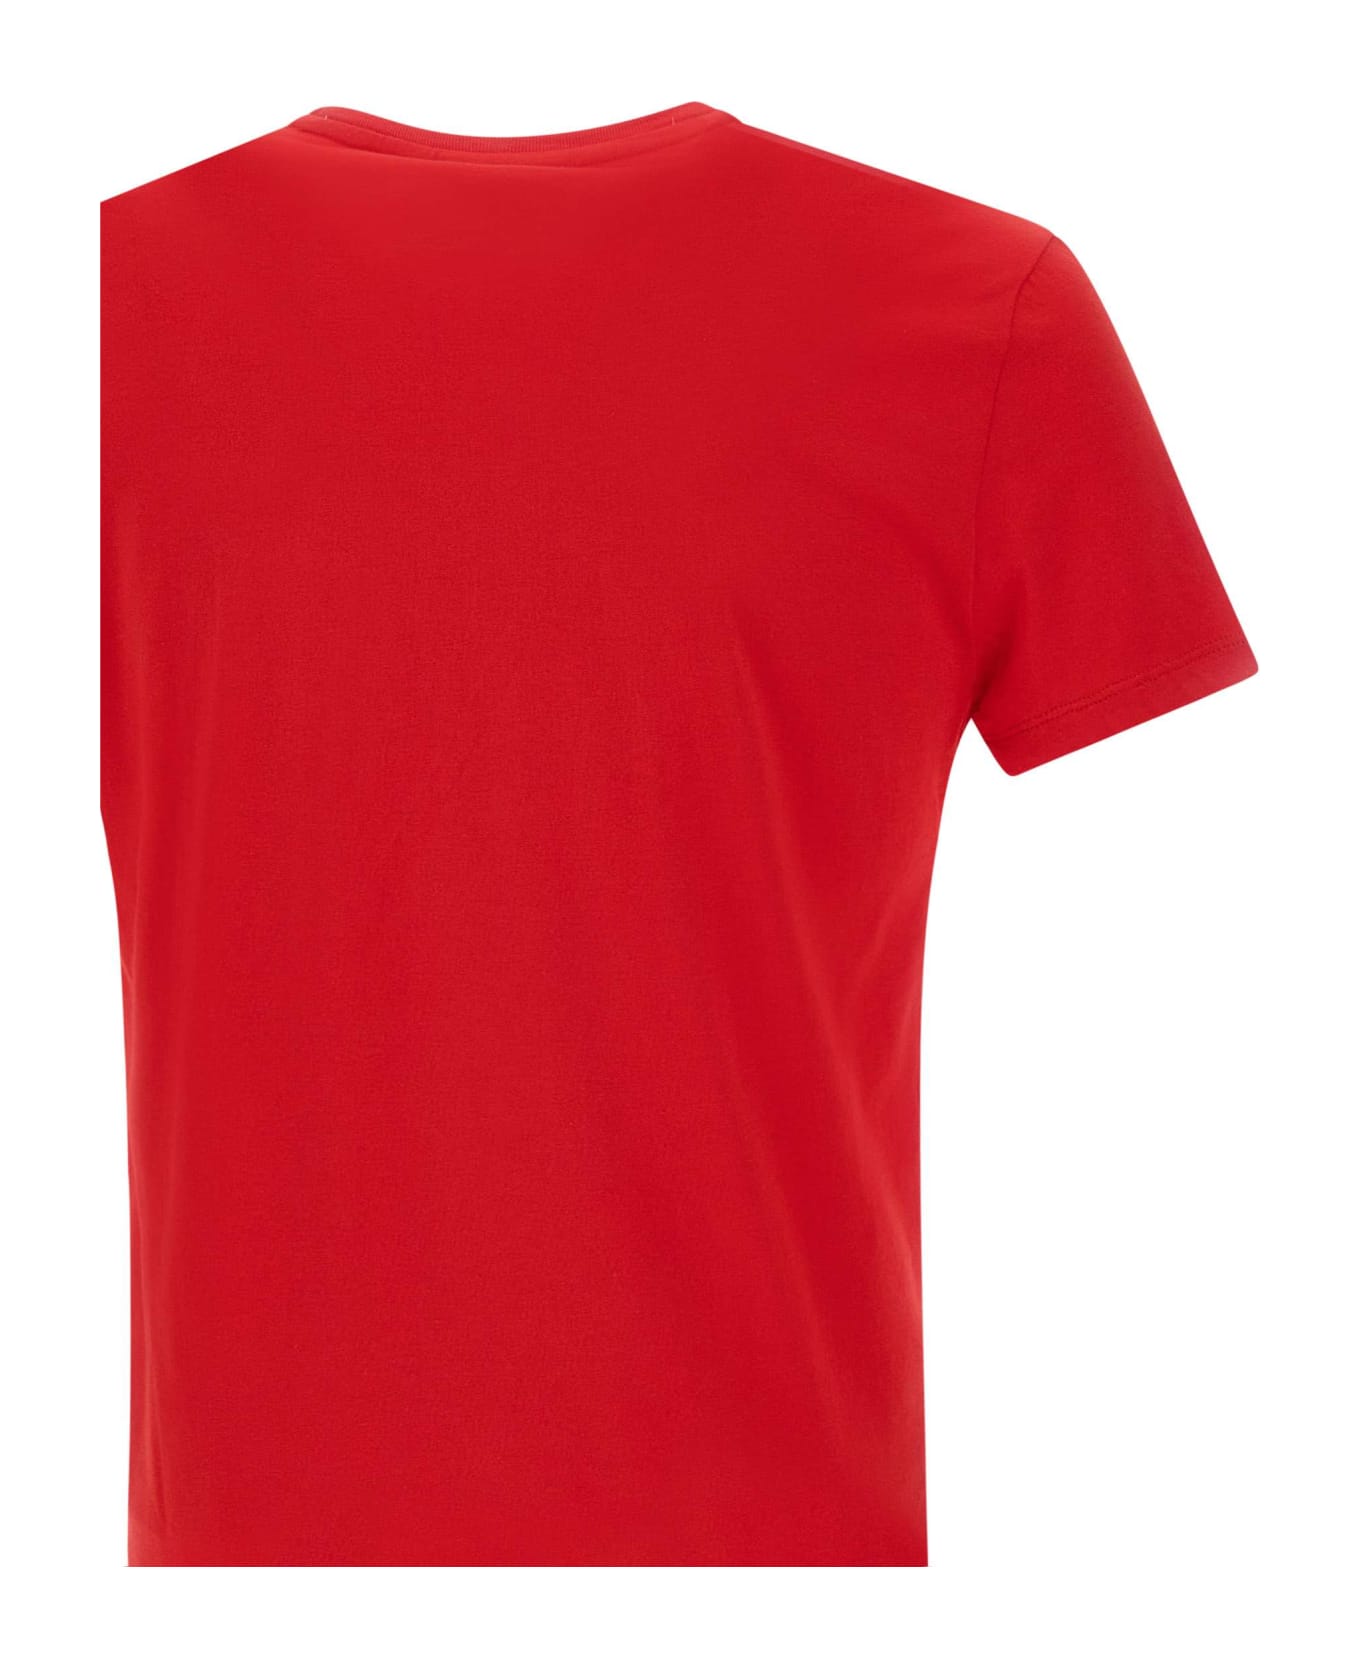 Lacoste Pima Cotton T-shirt - Red